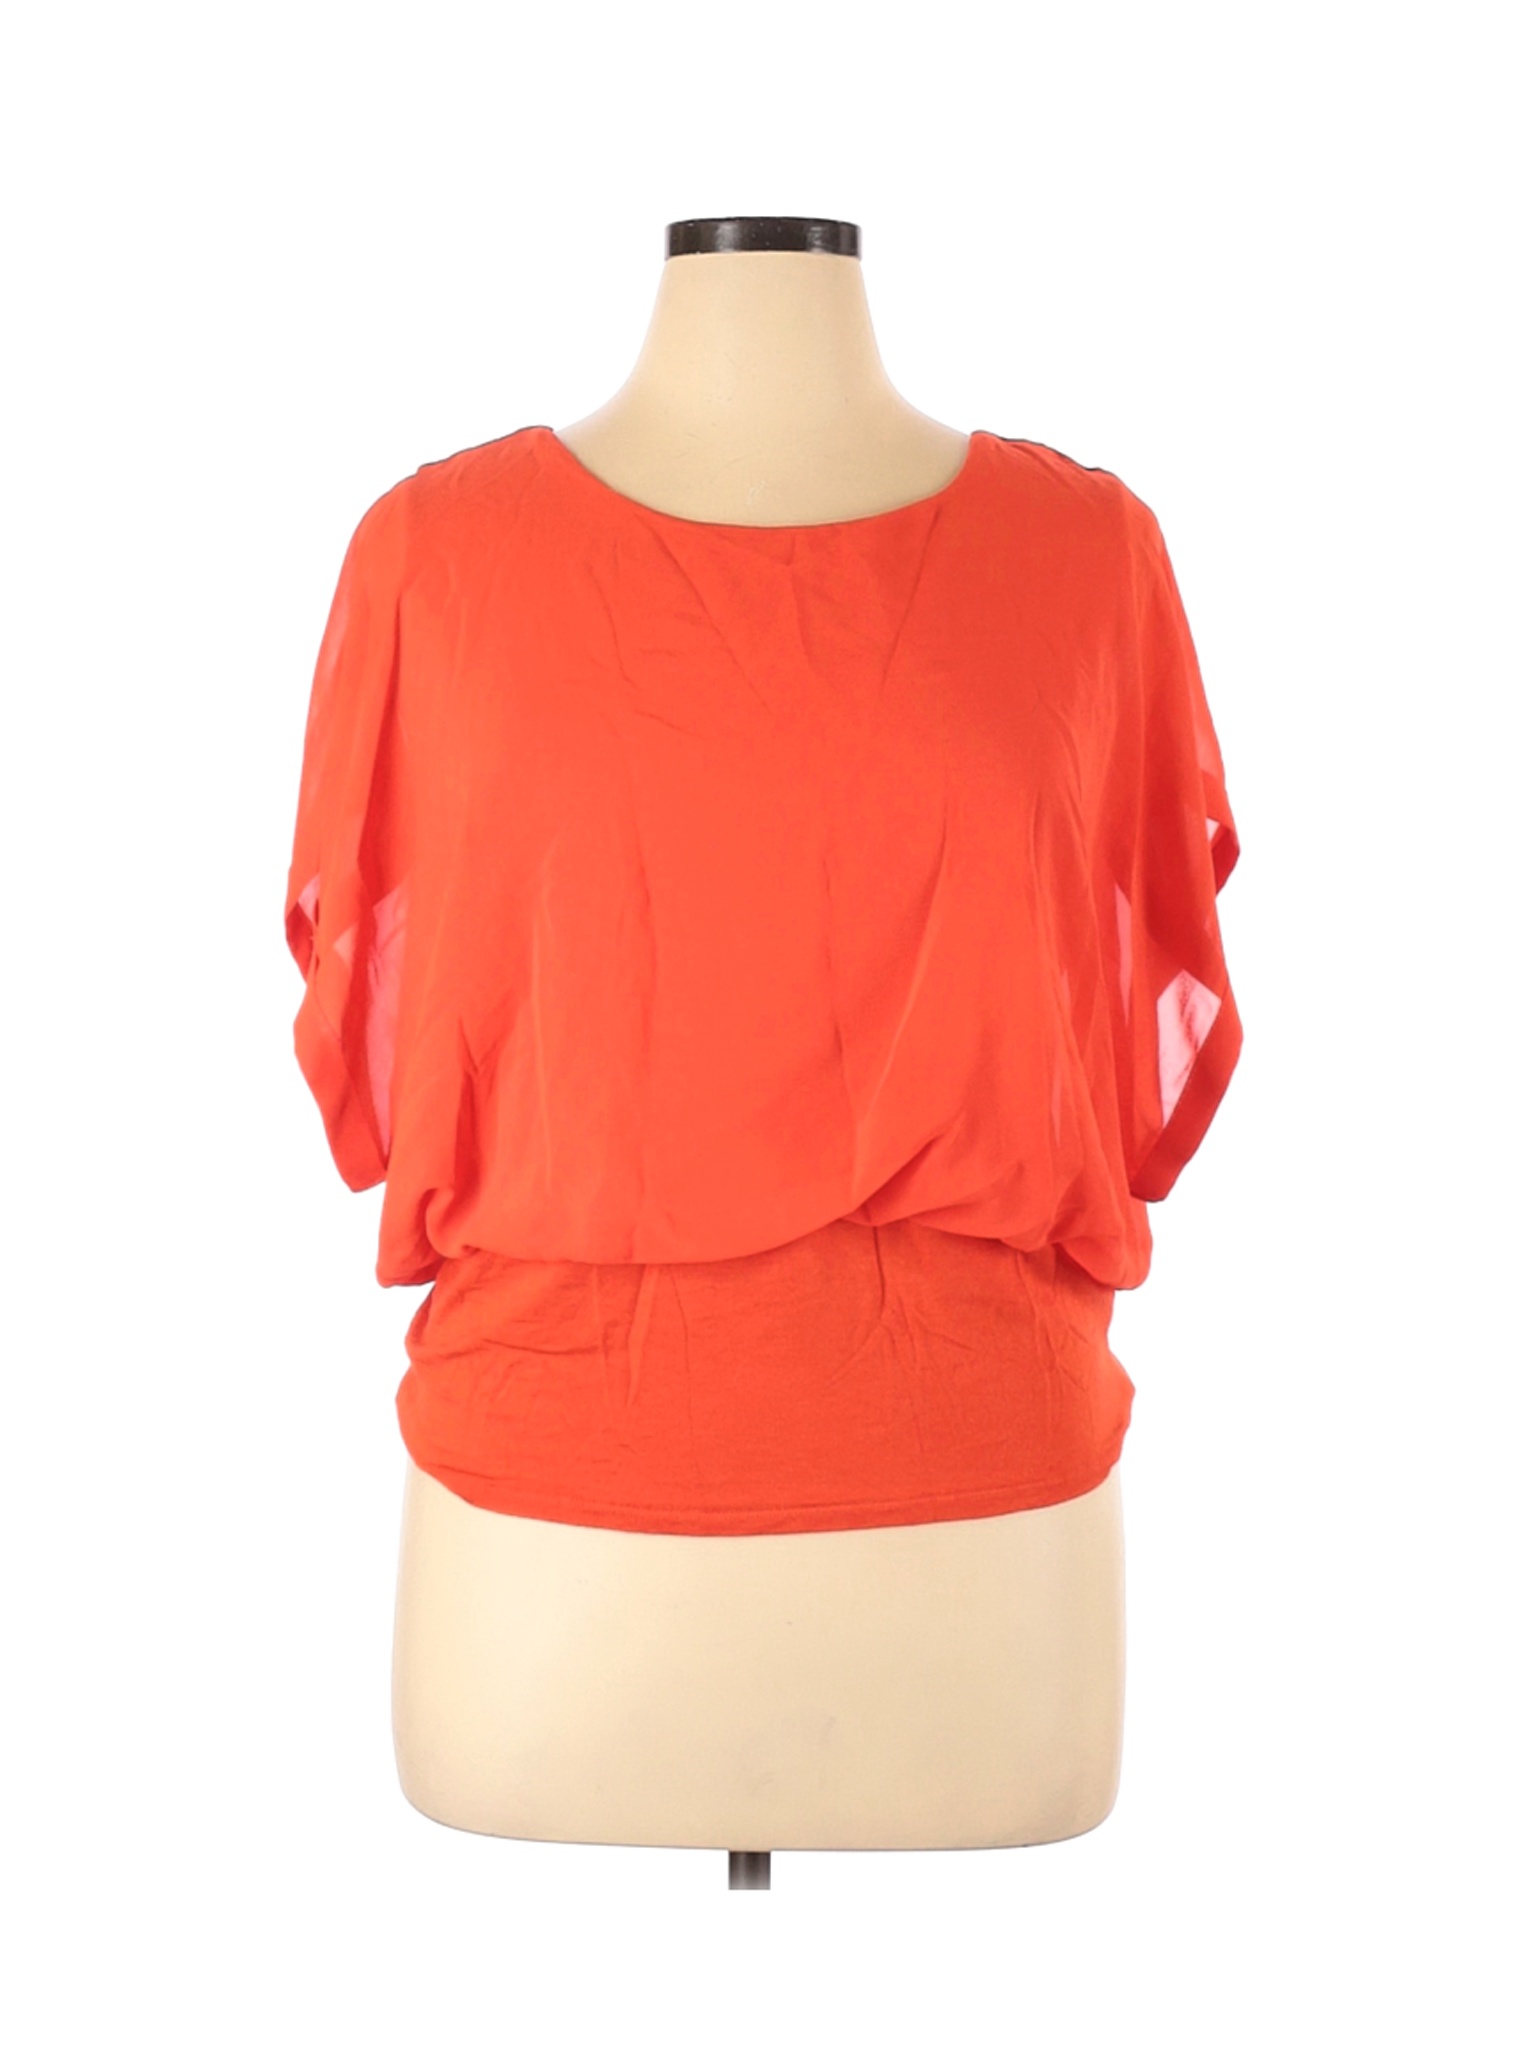 Joseph A. Women Orange Short Sleeve Blouse XL | eBay